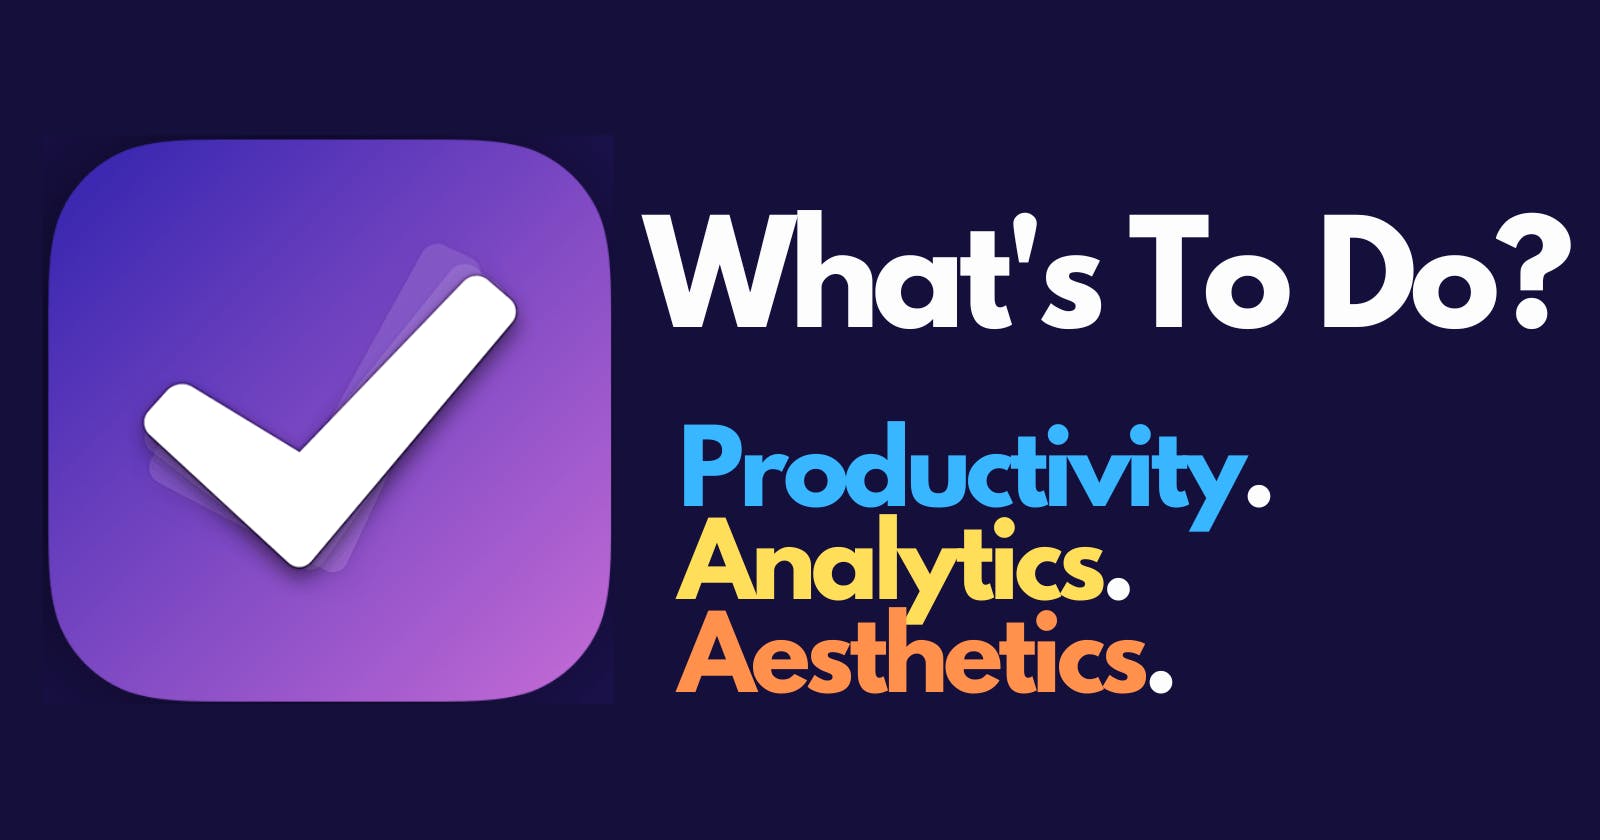 What’s to do — Productivity + Analytics + Aesthetics